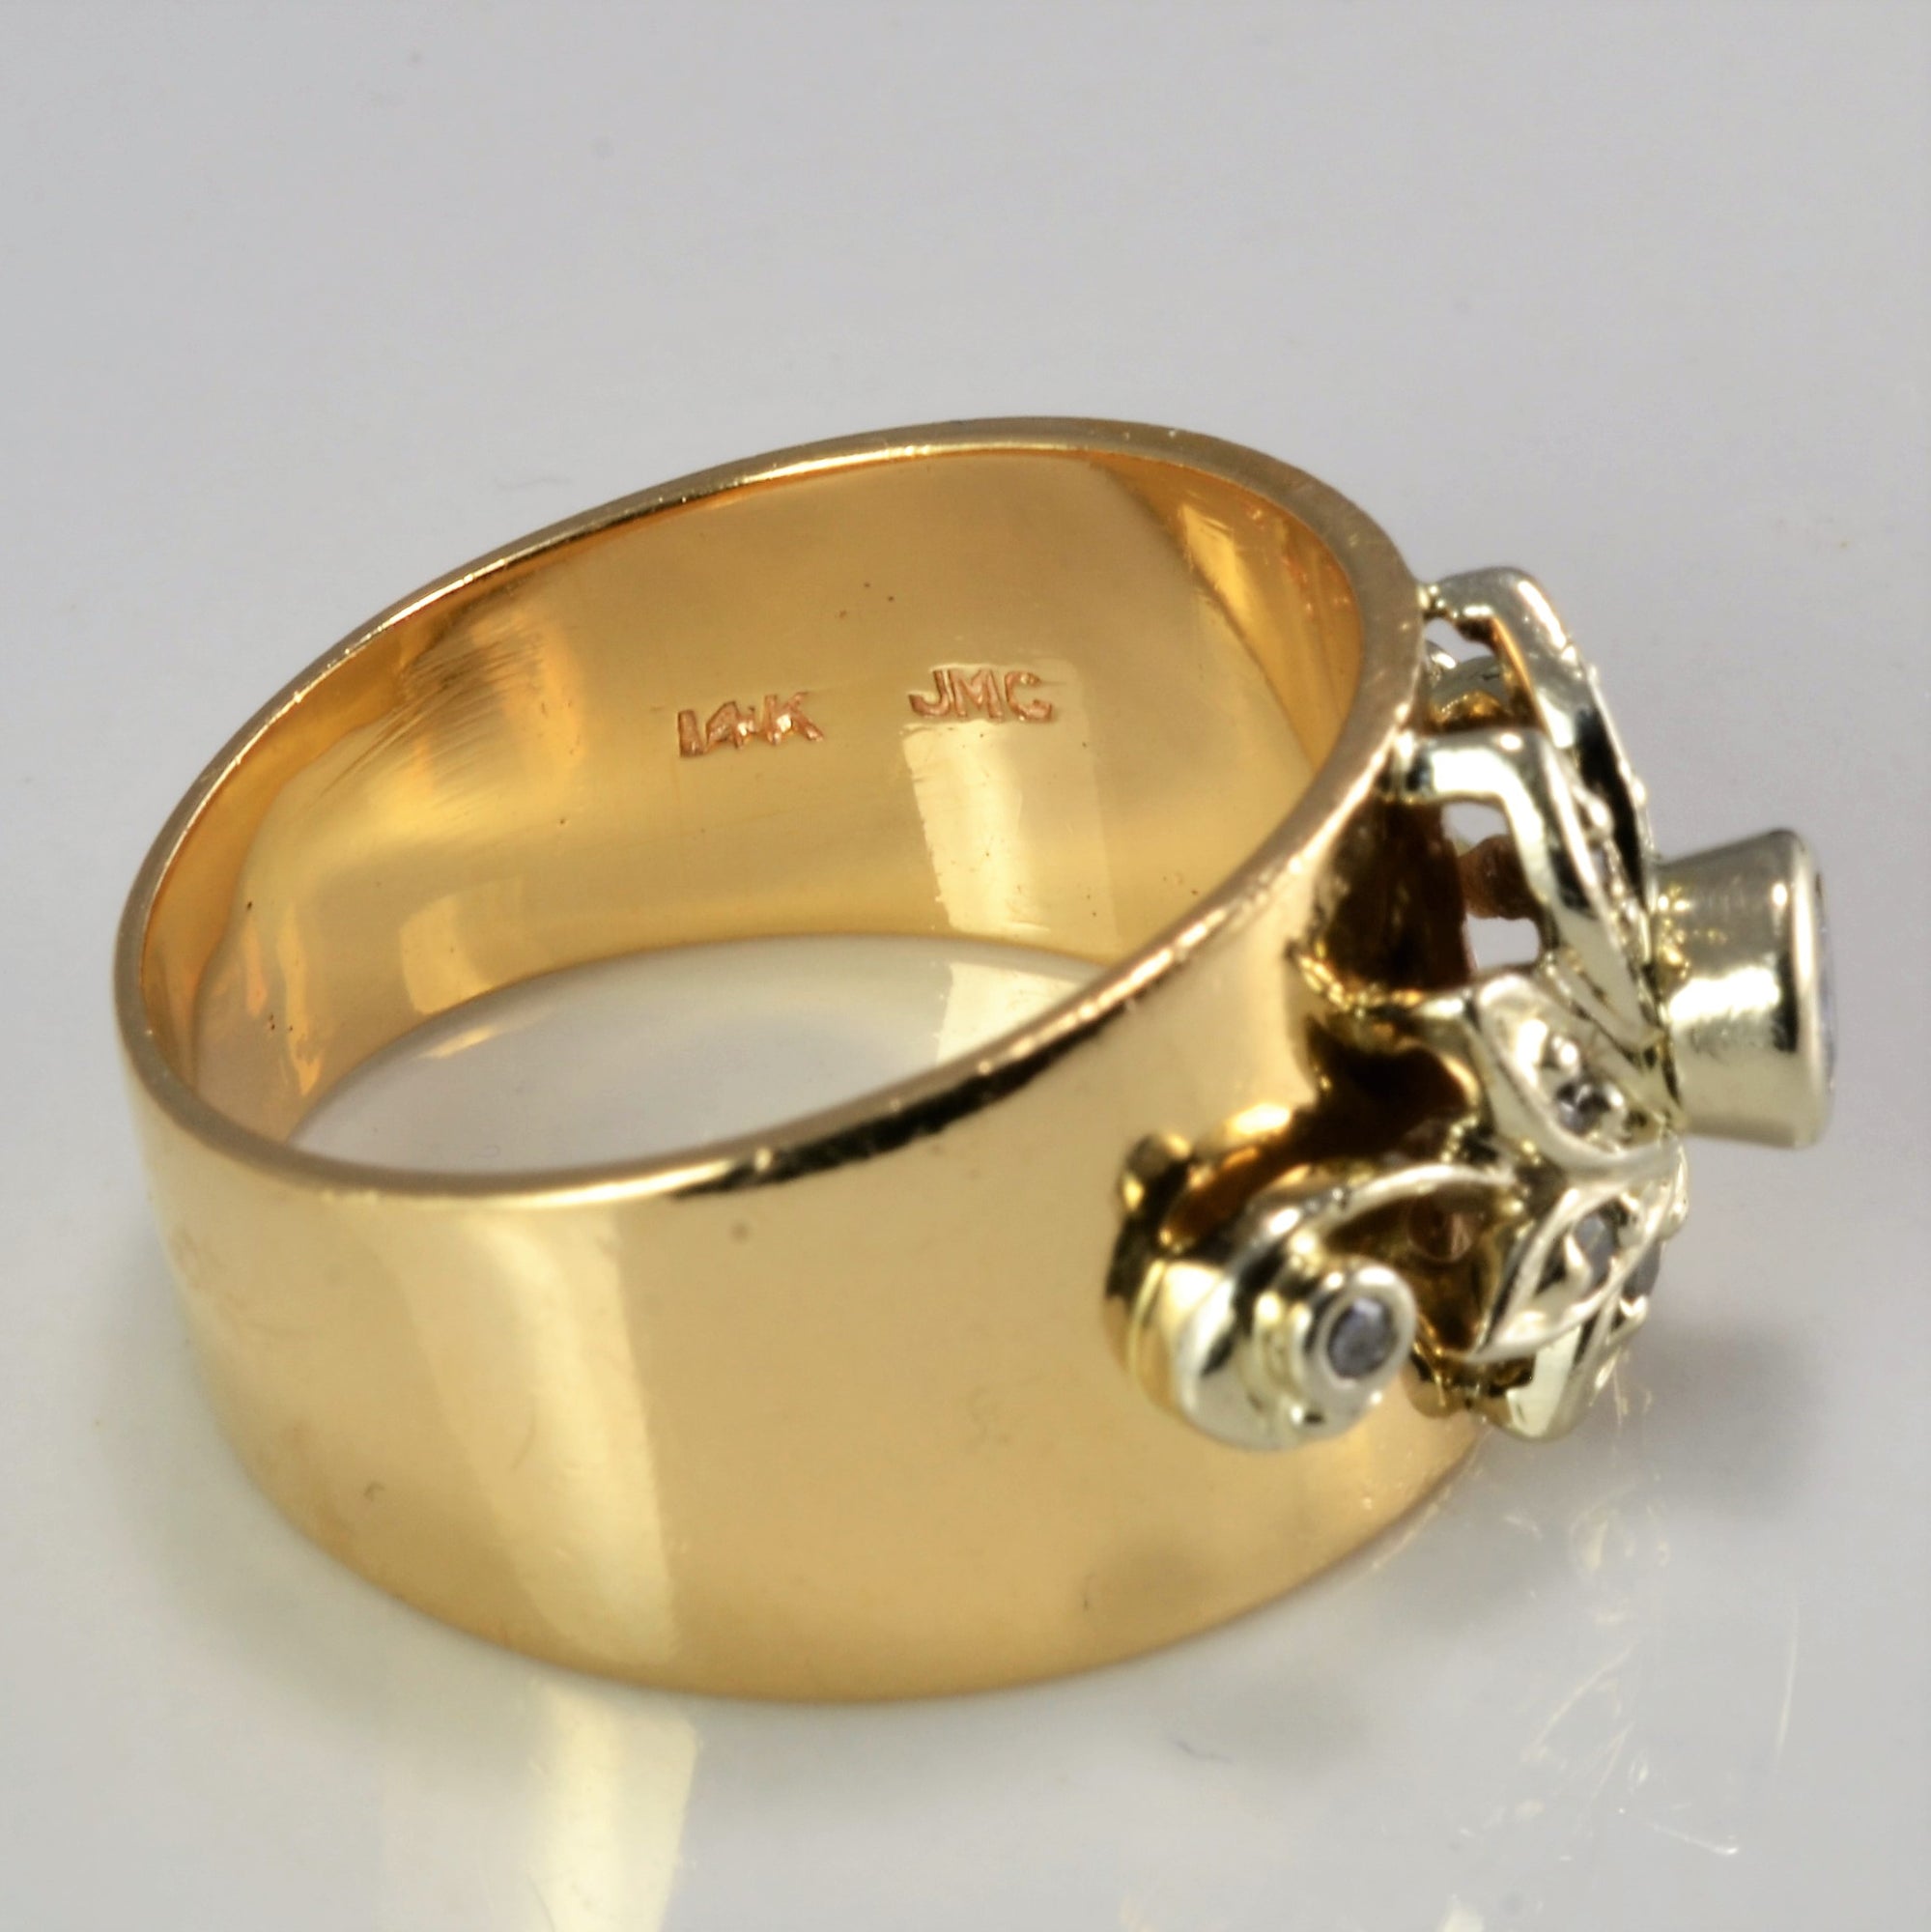 Vintage Floral Inspire Diamond Wide Ring | 0.27 ctw, SZ 7.5 |